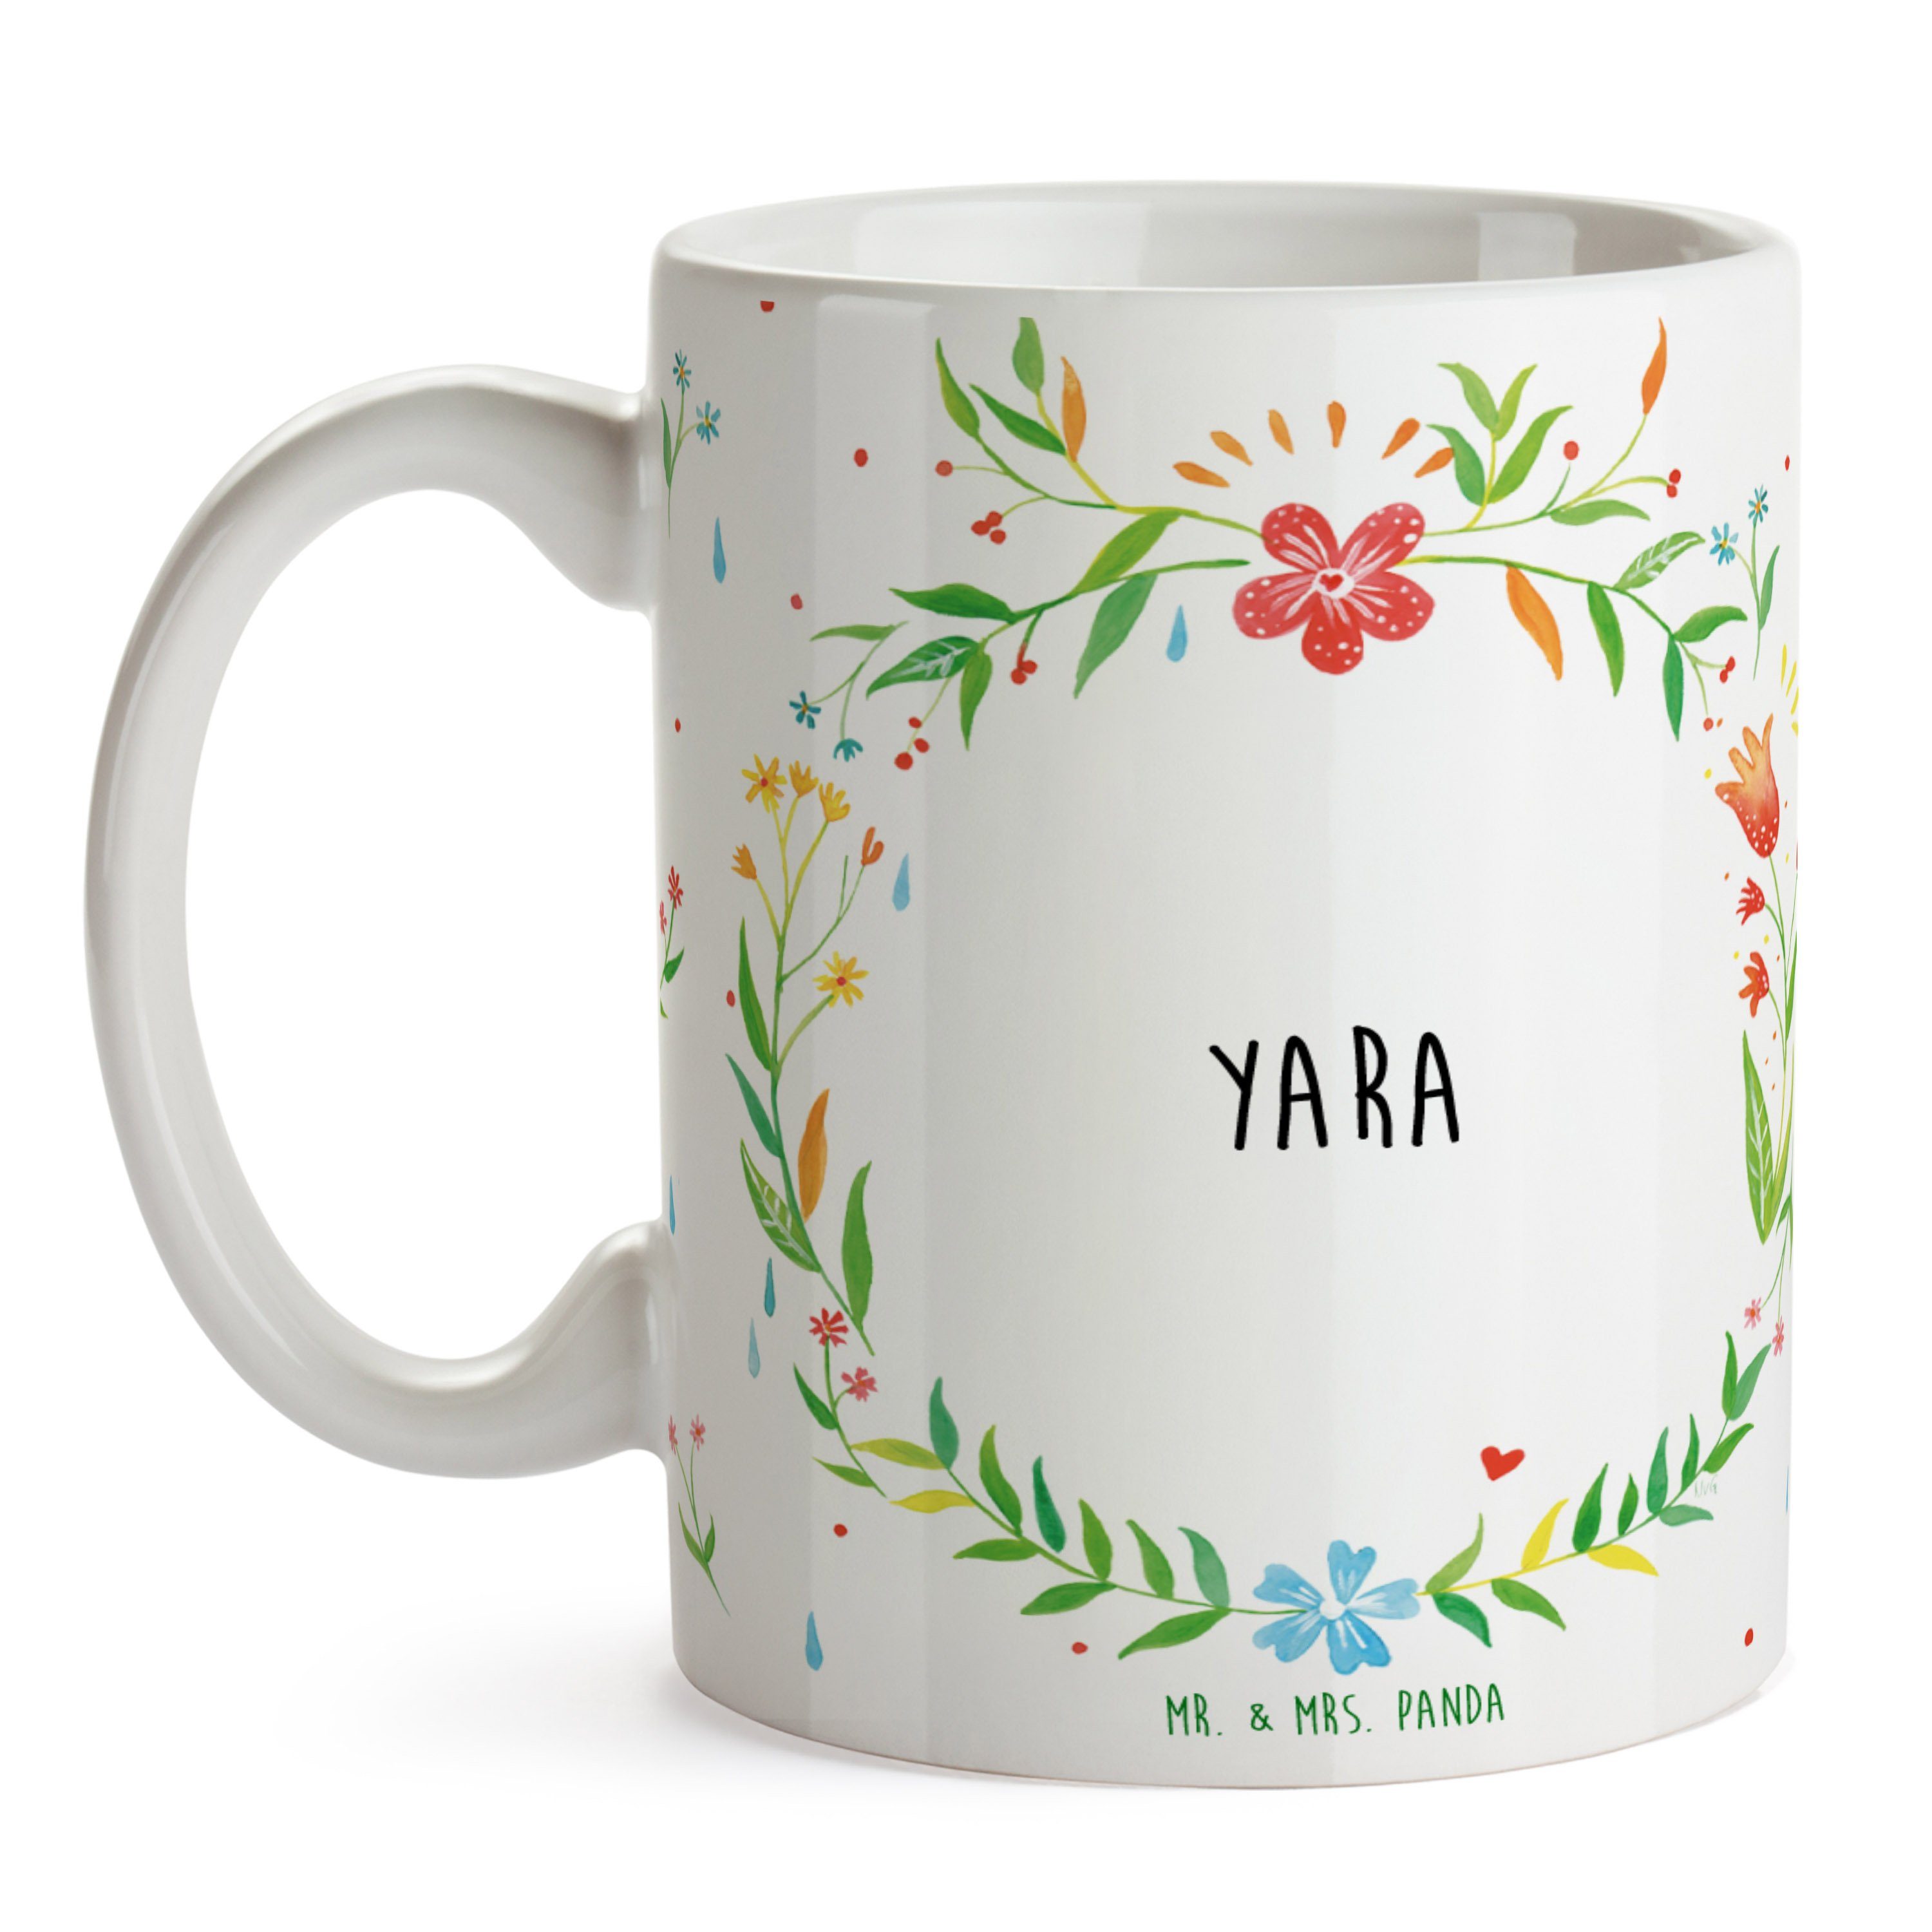 Geschenk Motive, Panda Tasse, - & Yara Porzellantasse, Tasse Keramik Geschenk, Kaffee, Mr. Tasse Mrs.